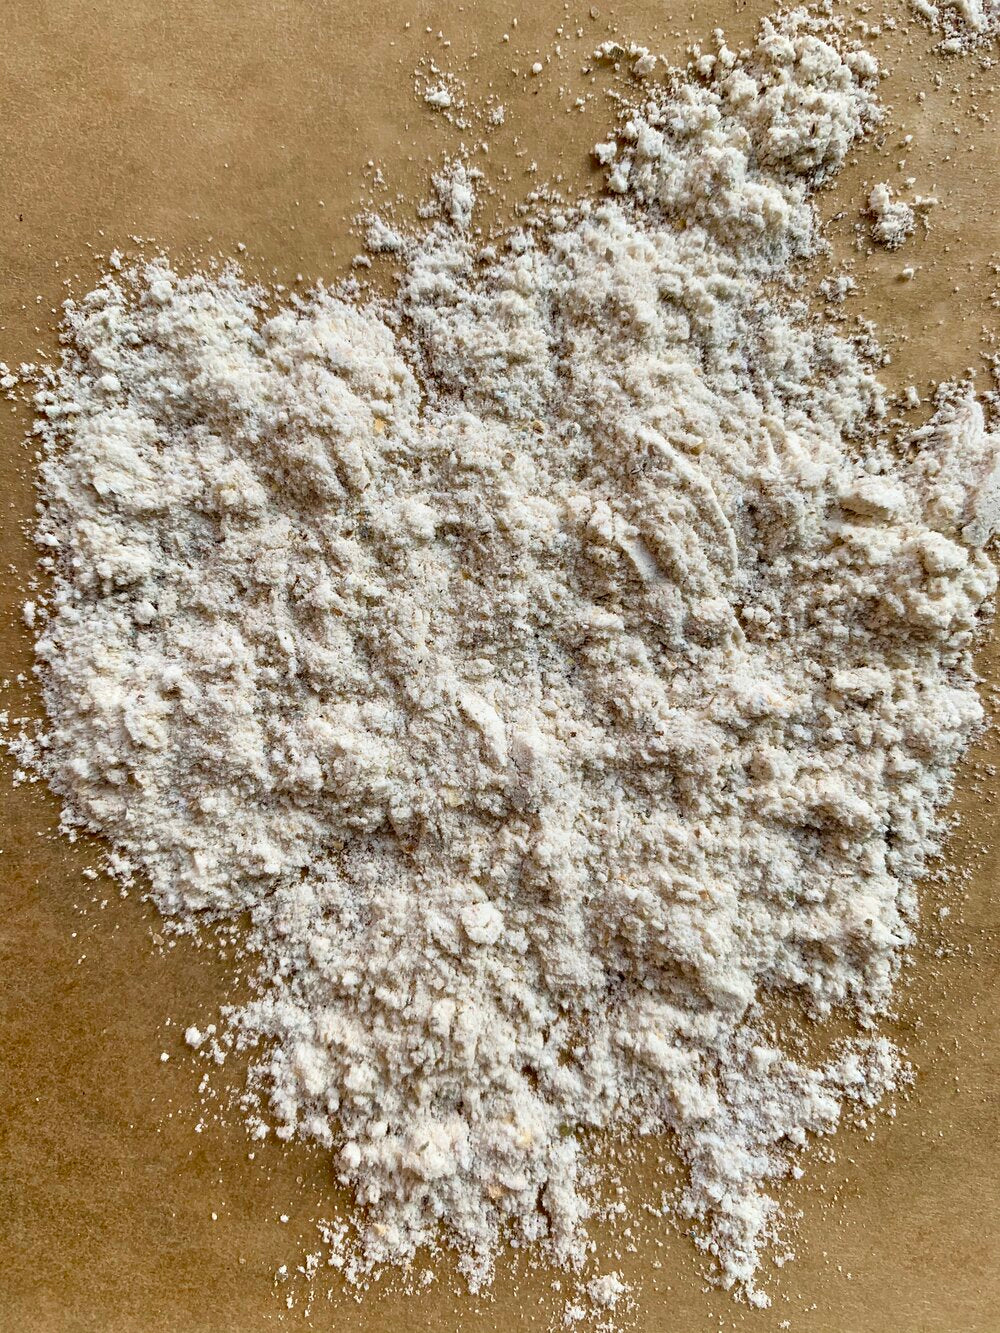 Fresh-Milled Flour